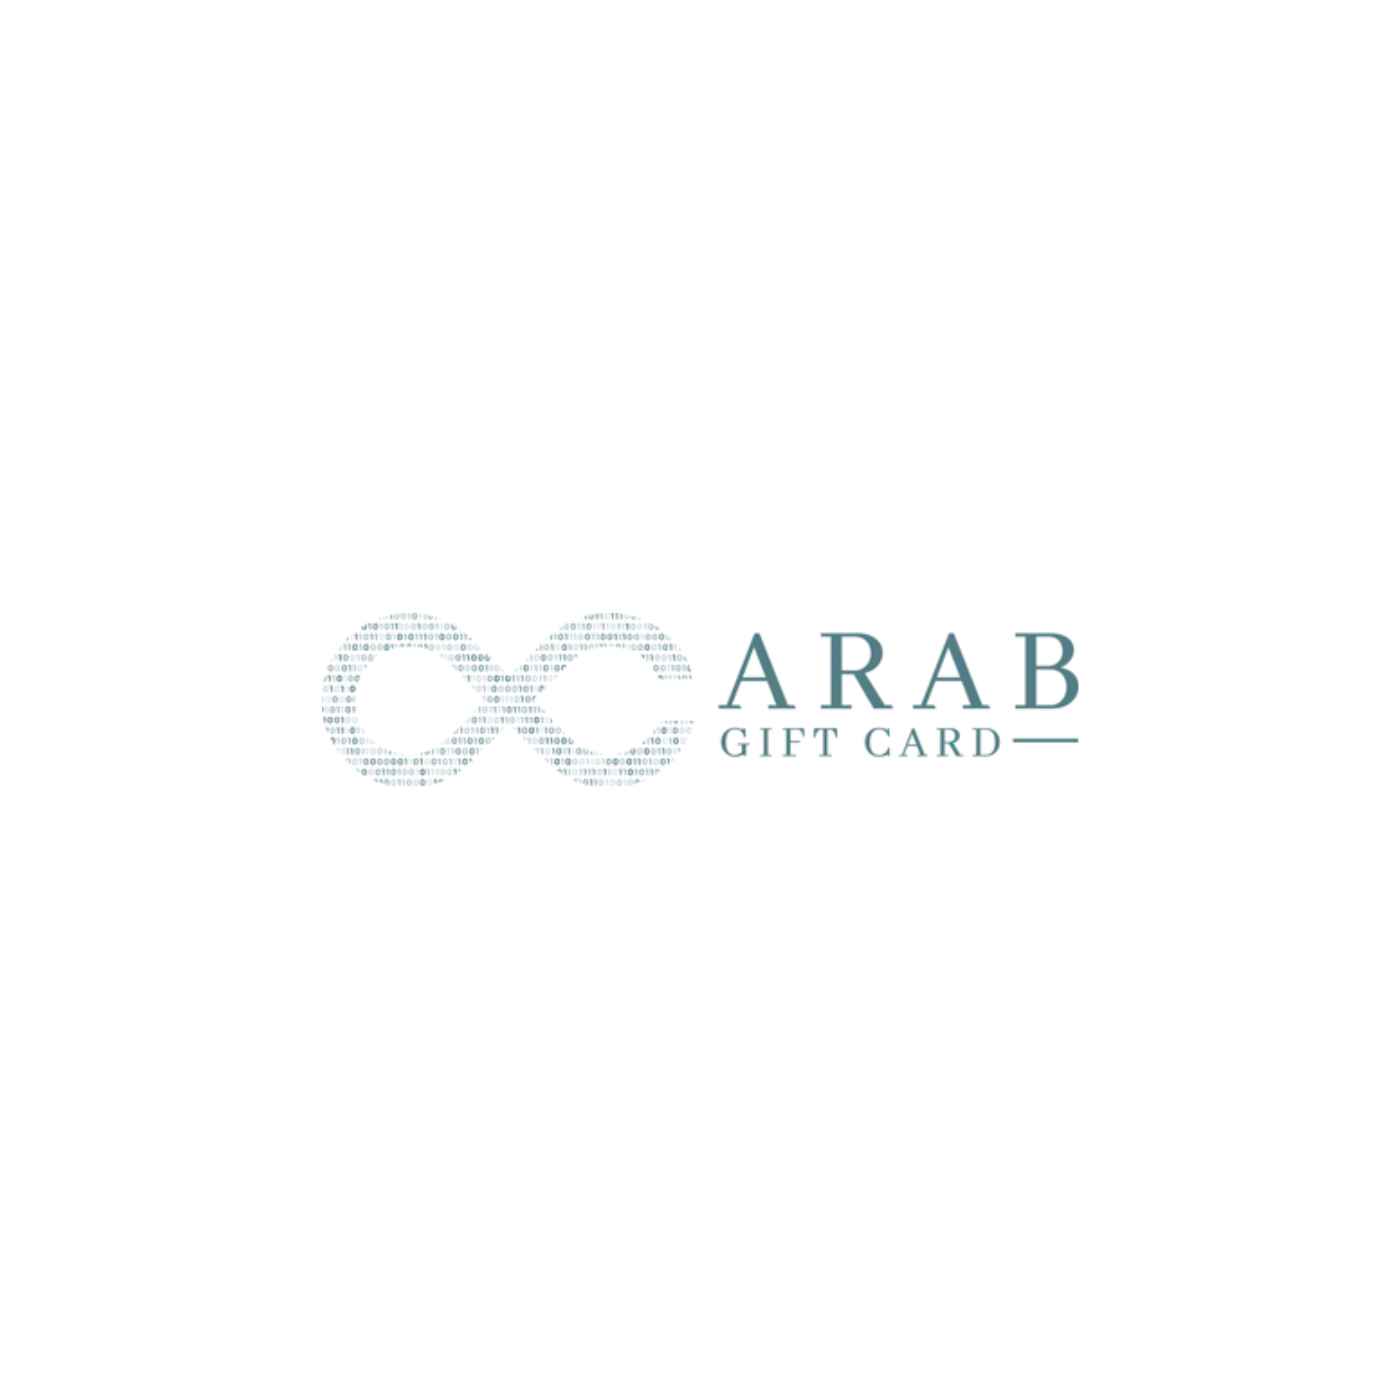 Arab Gift Card